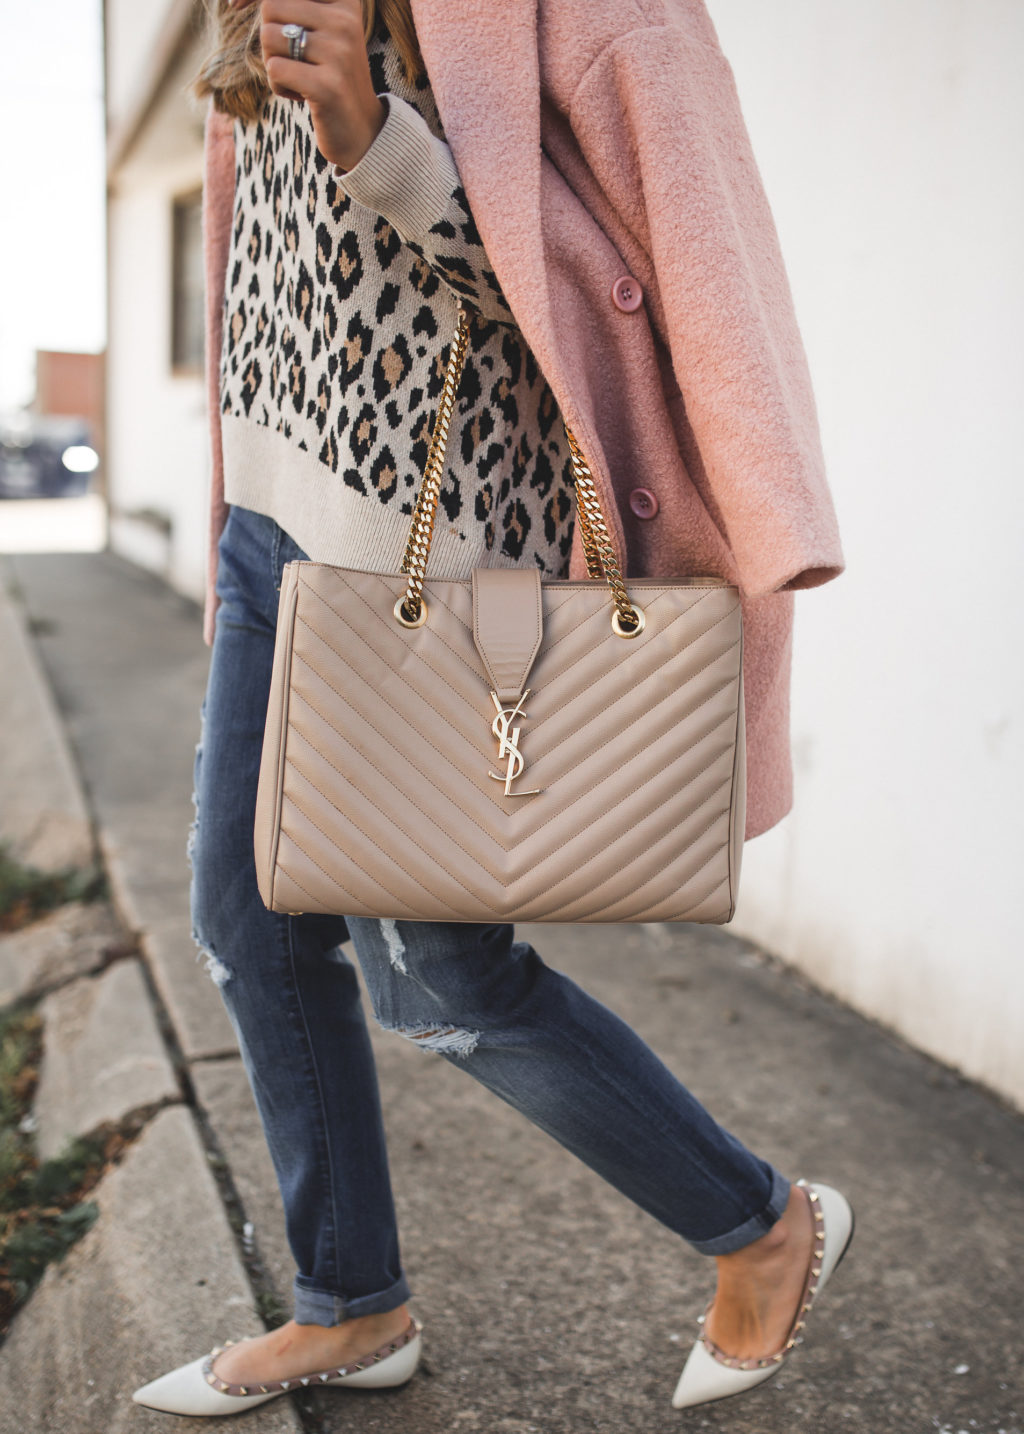 Leopard Sweater & Pink Coat | The Teacher Diva: a Dallas Fashion Blog ...